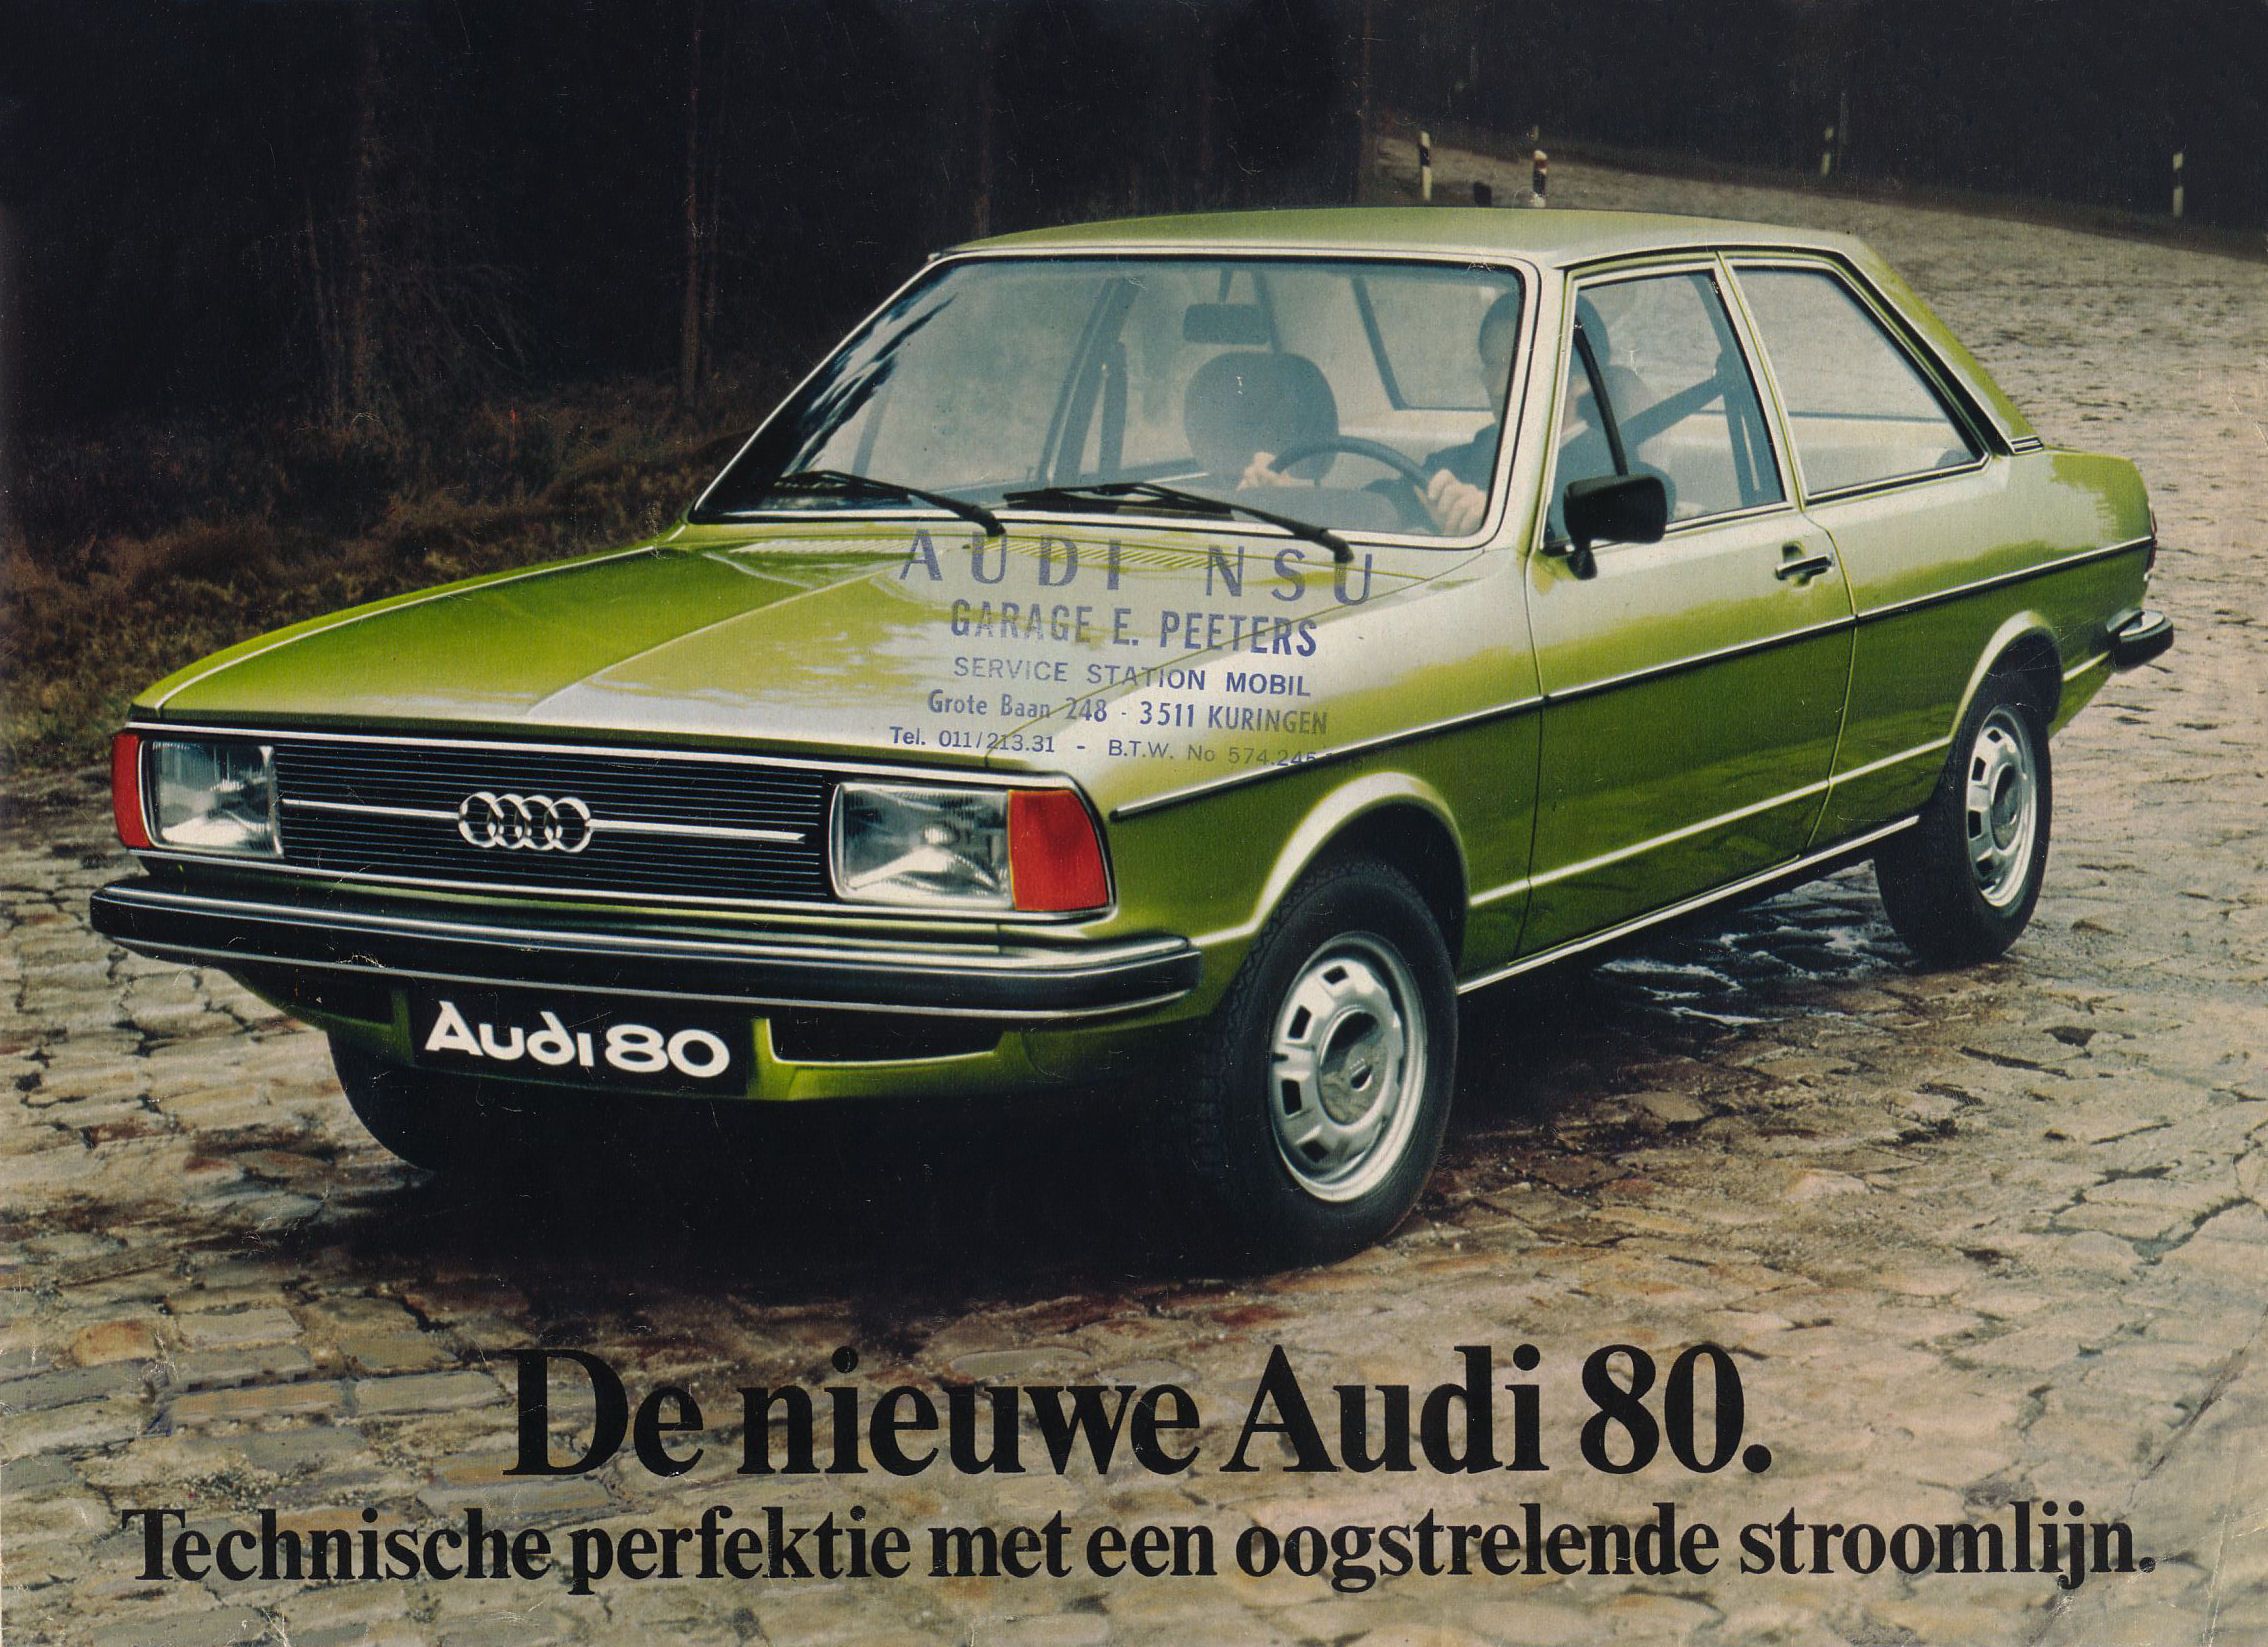 1976 Audi 80 brochure